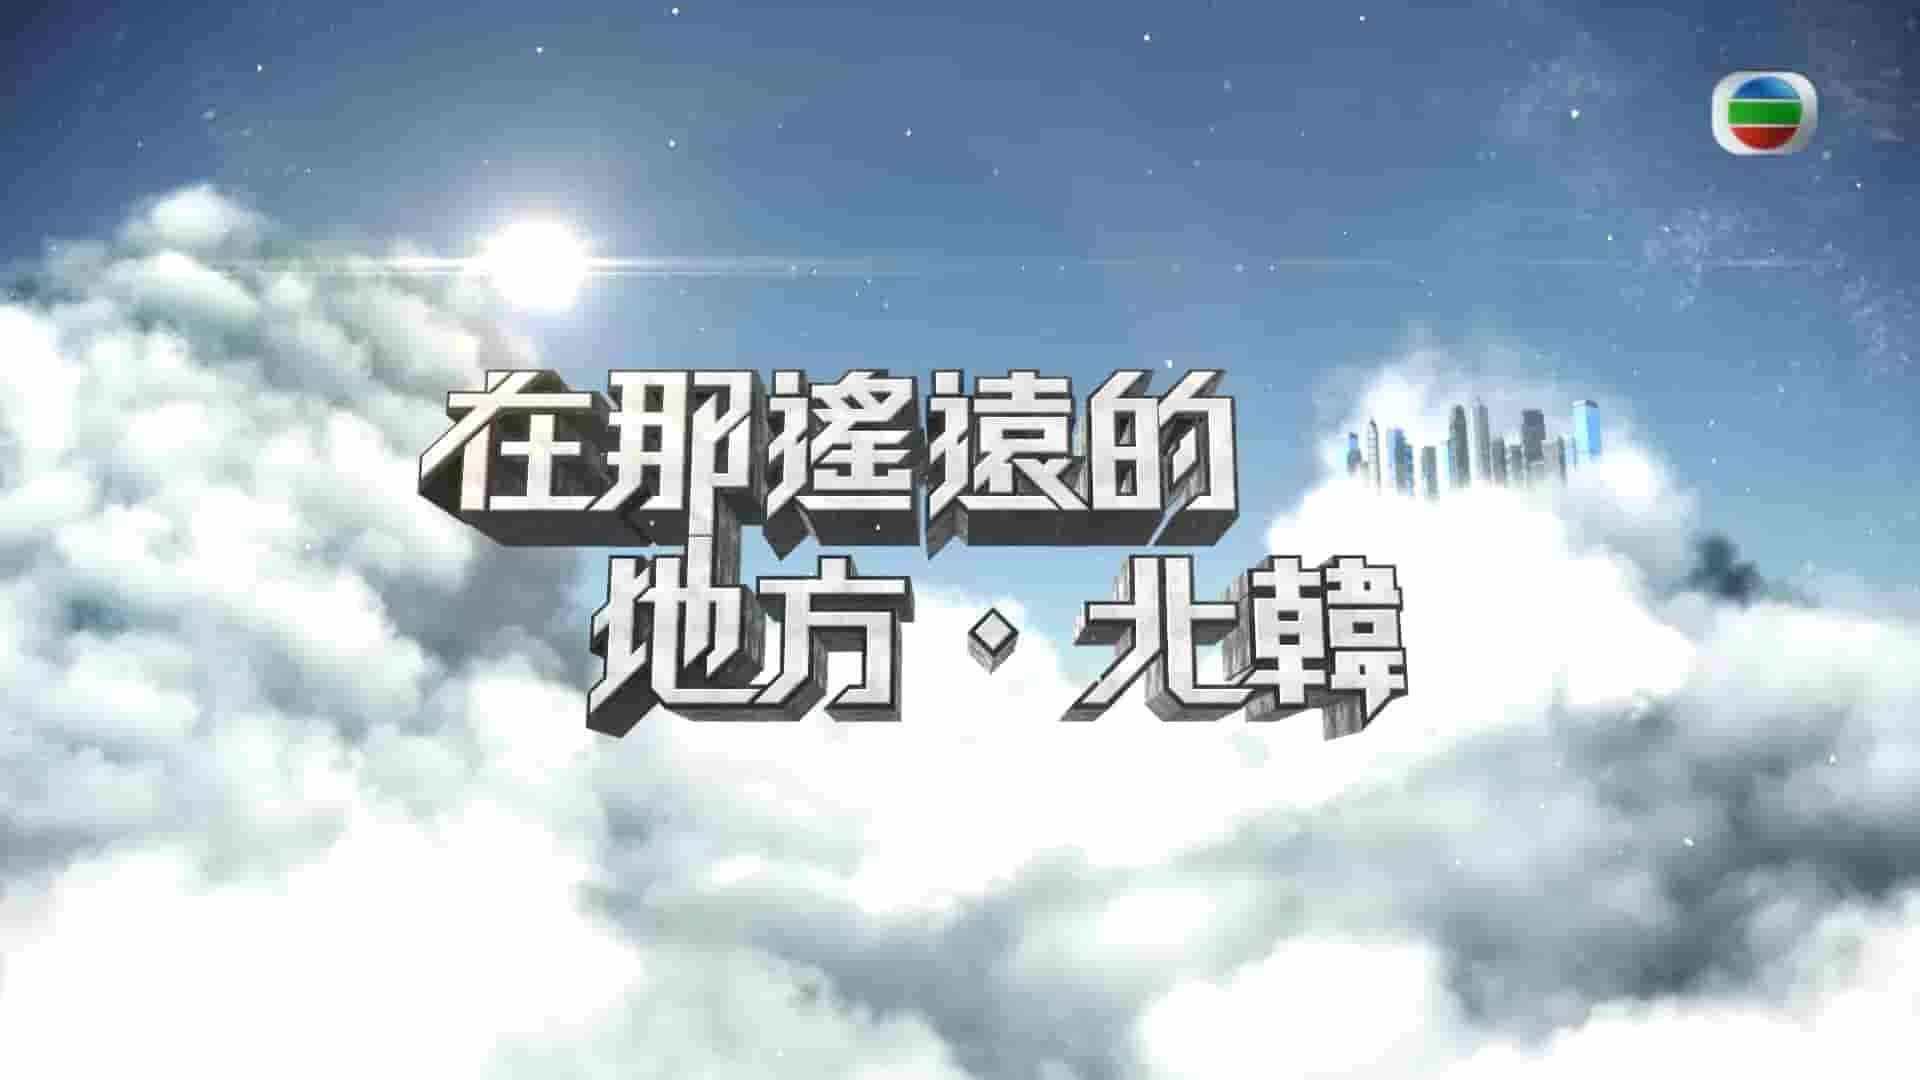 TVB纪录片《在那遥远的地方 北韩 Not Far But Away 》全5集 粤语中字 1080P高清网盘下载 